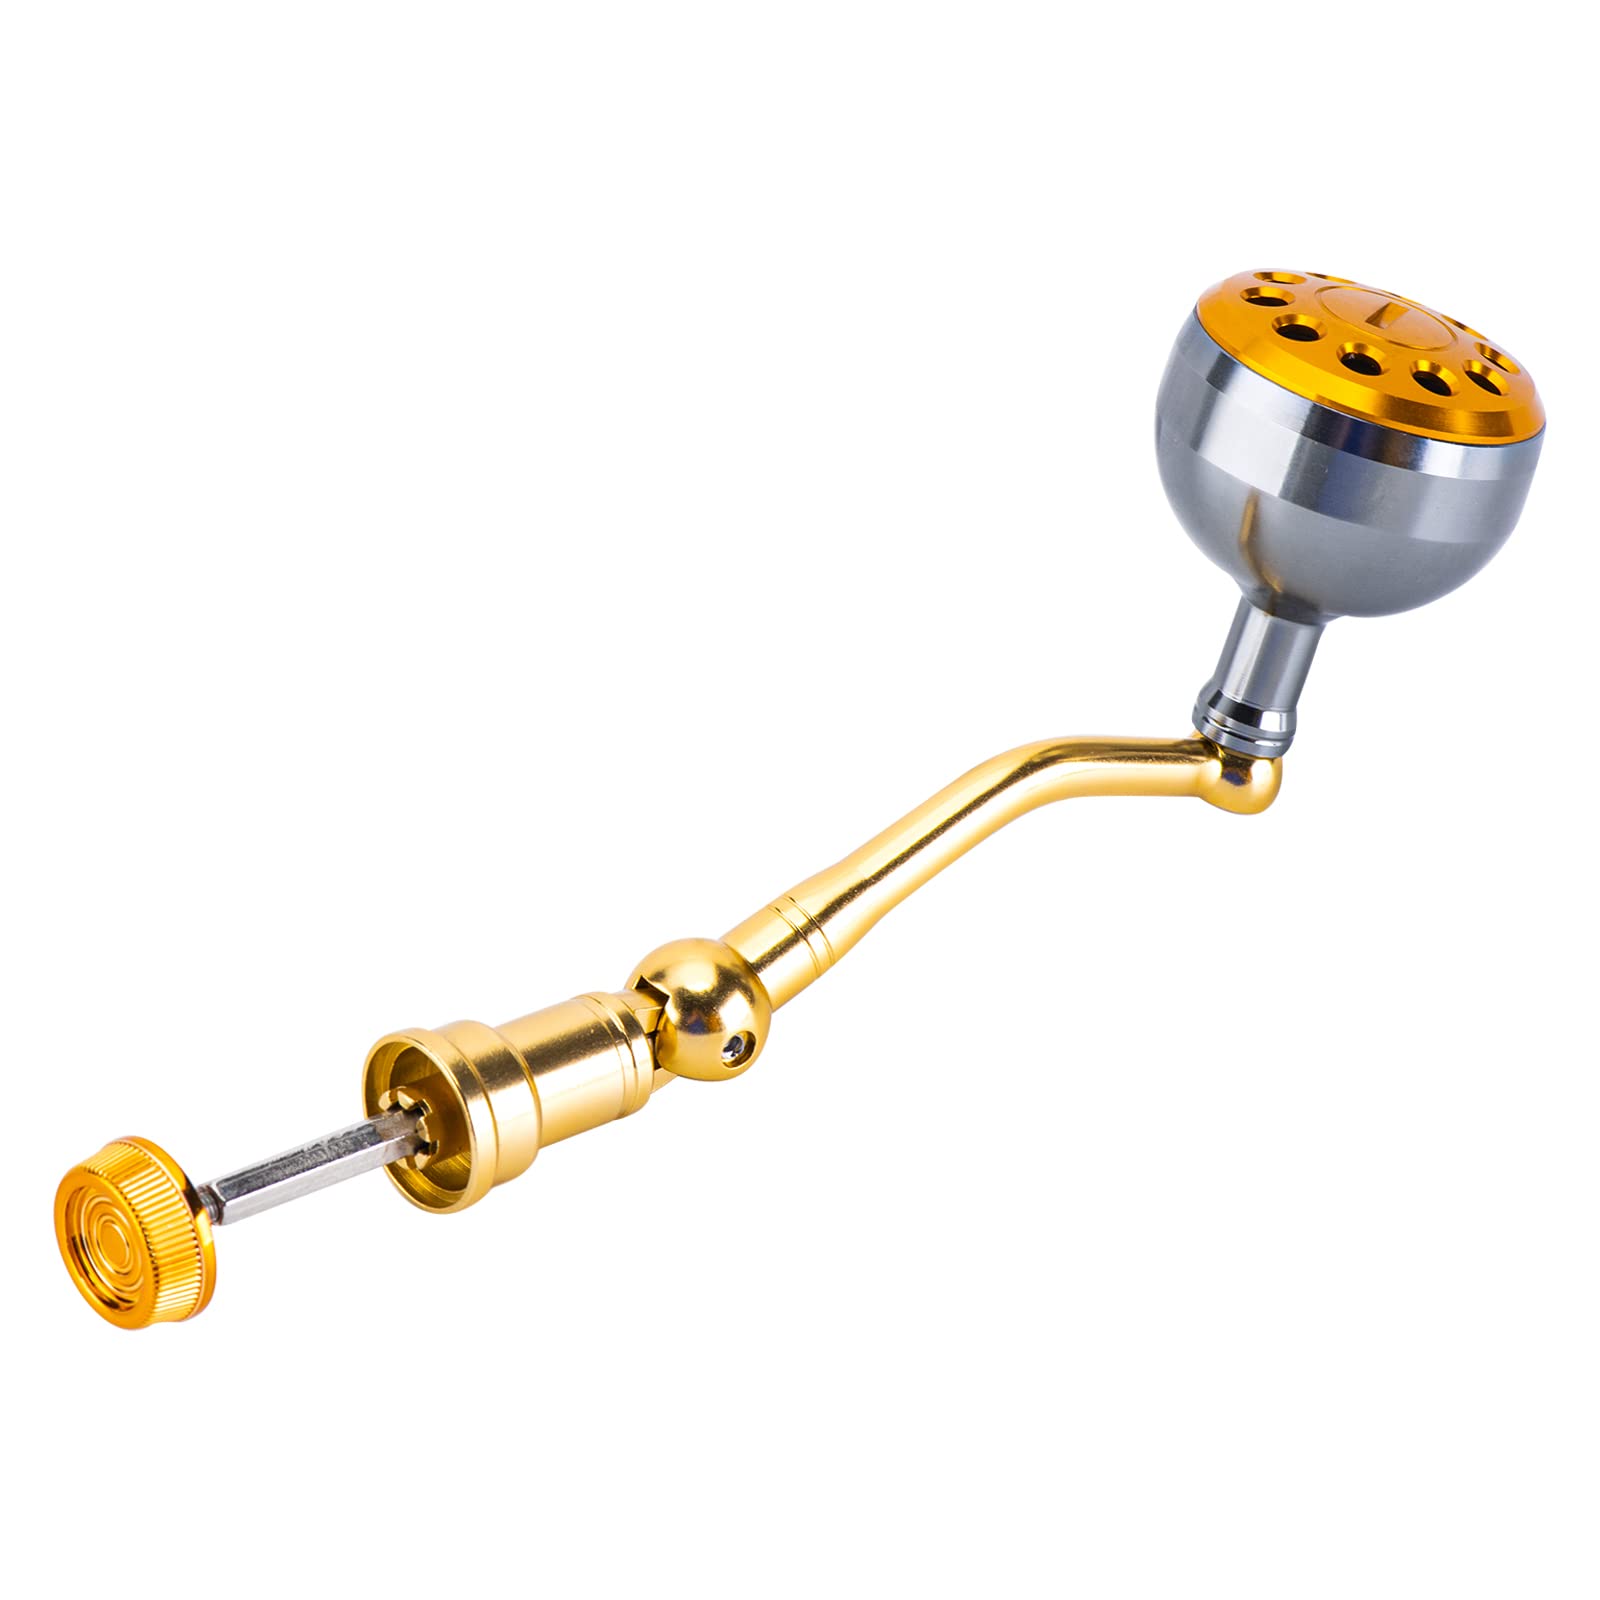 Power Knob,Bait Casting Fishing Reel Power Handle Grip Crank Arm Spinning  Reel Rotary Knob Repair Parts